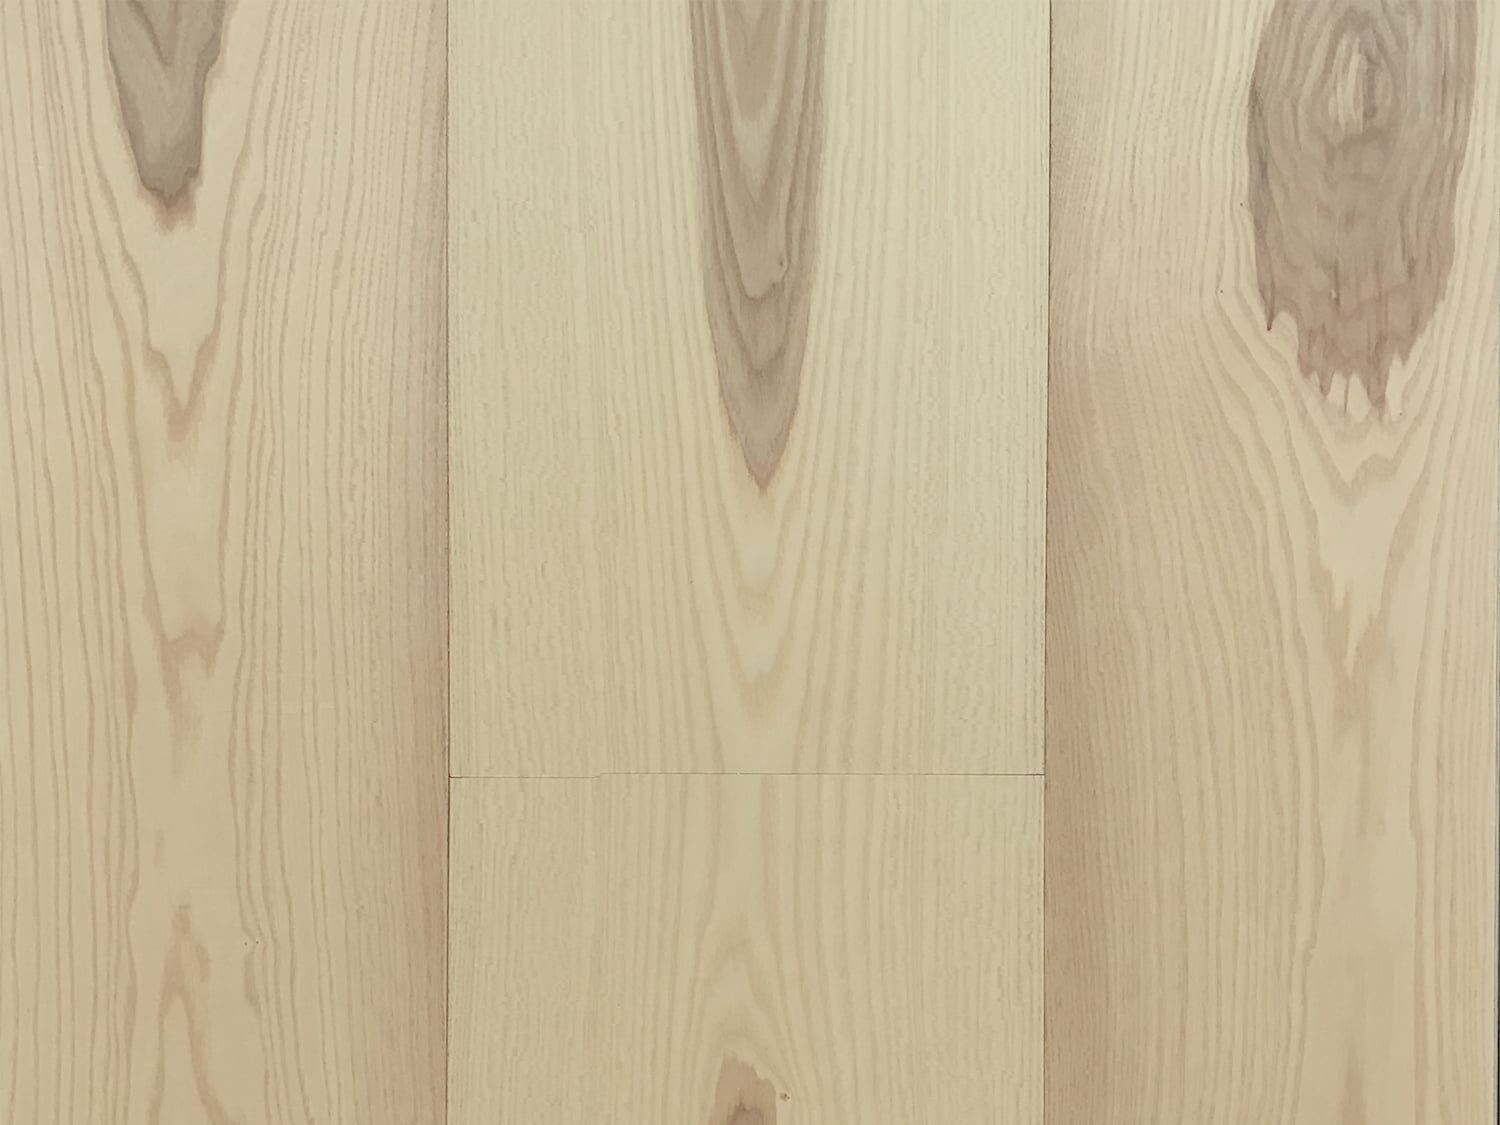 European Ash Flooring - Wood Flooring Product